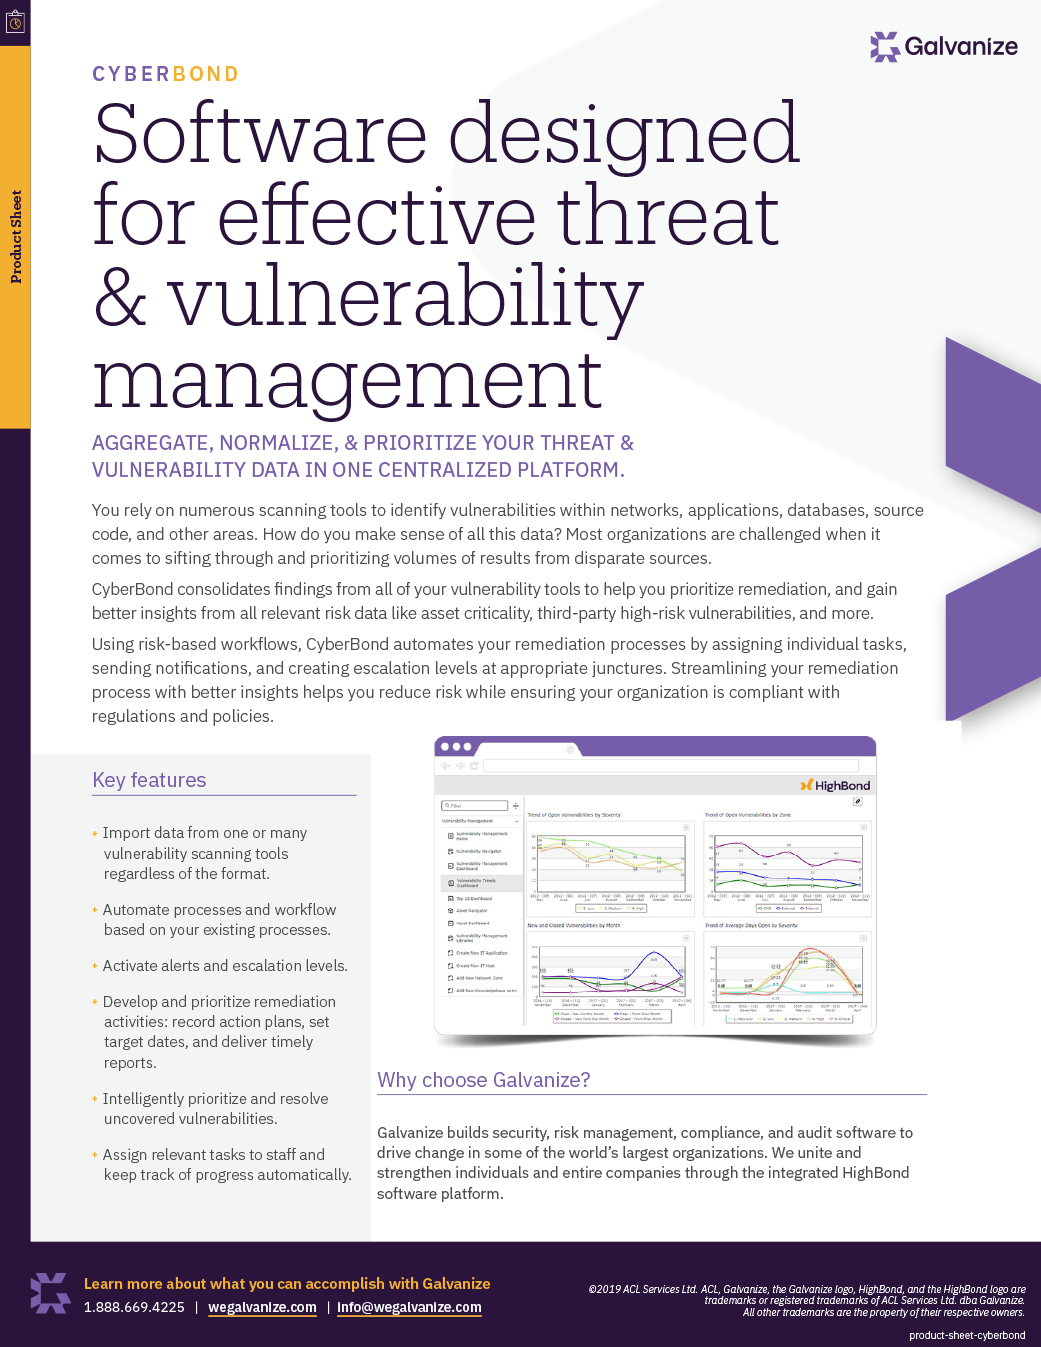 Software designed for effective threat & vulnerability management